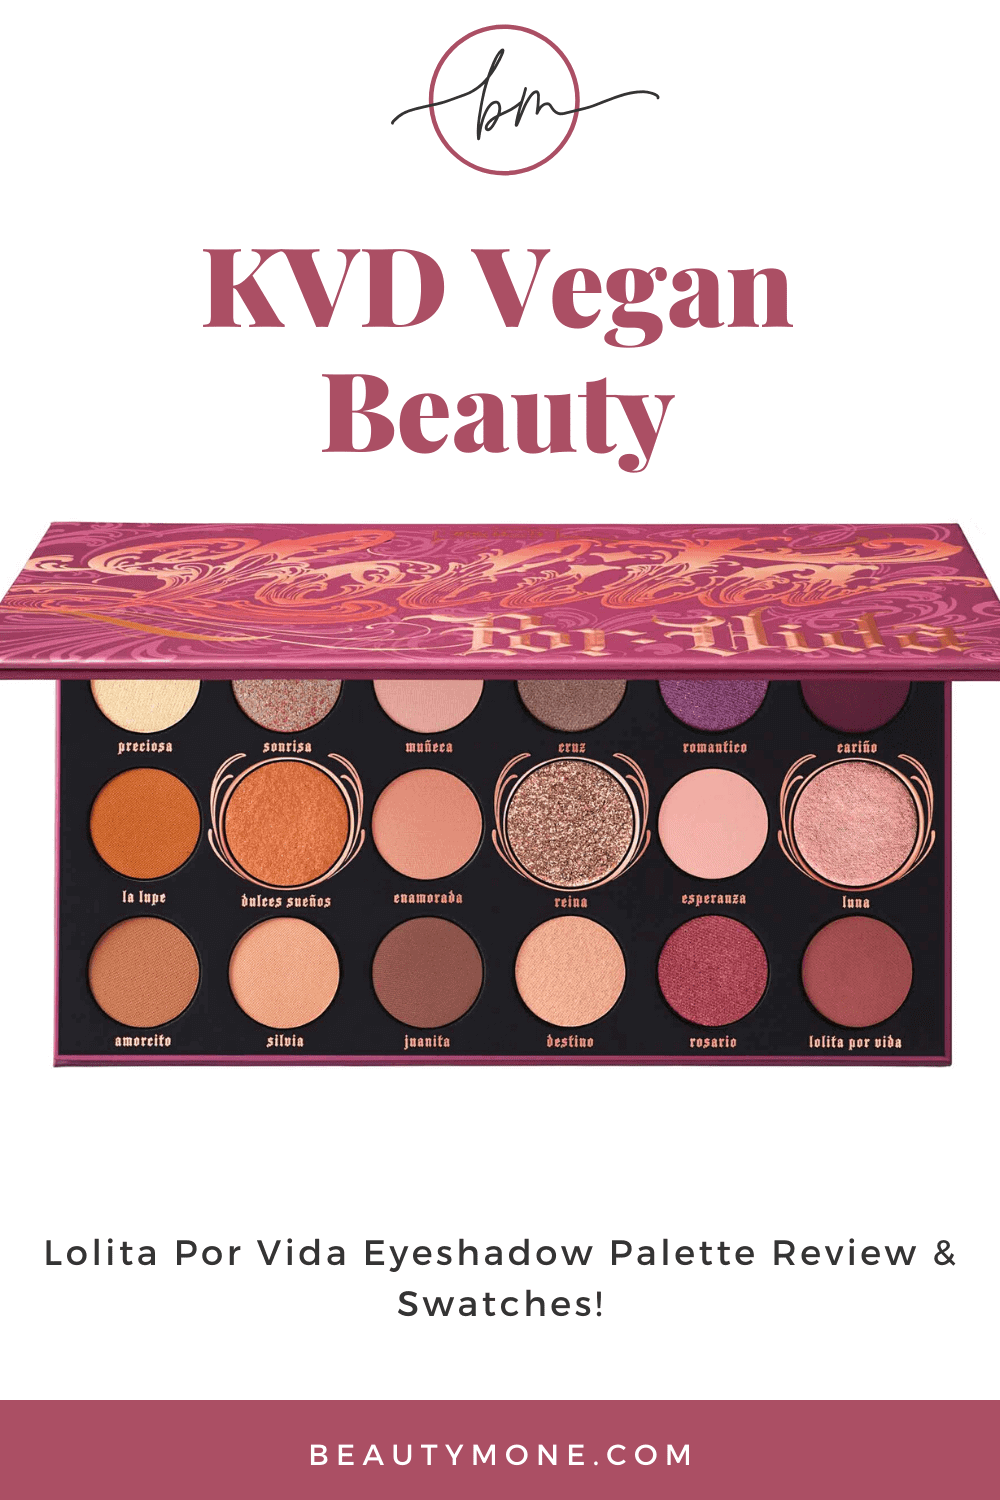 KVD Vegan Beauty,Lolita Por Vida